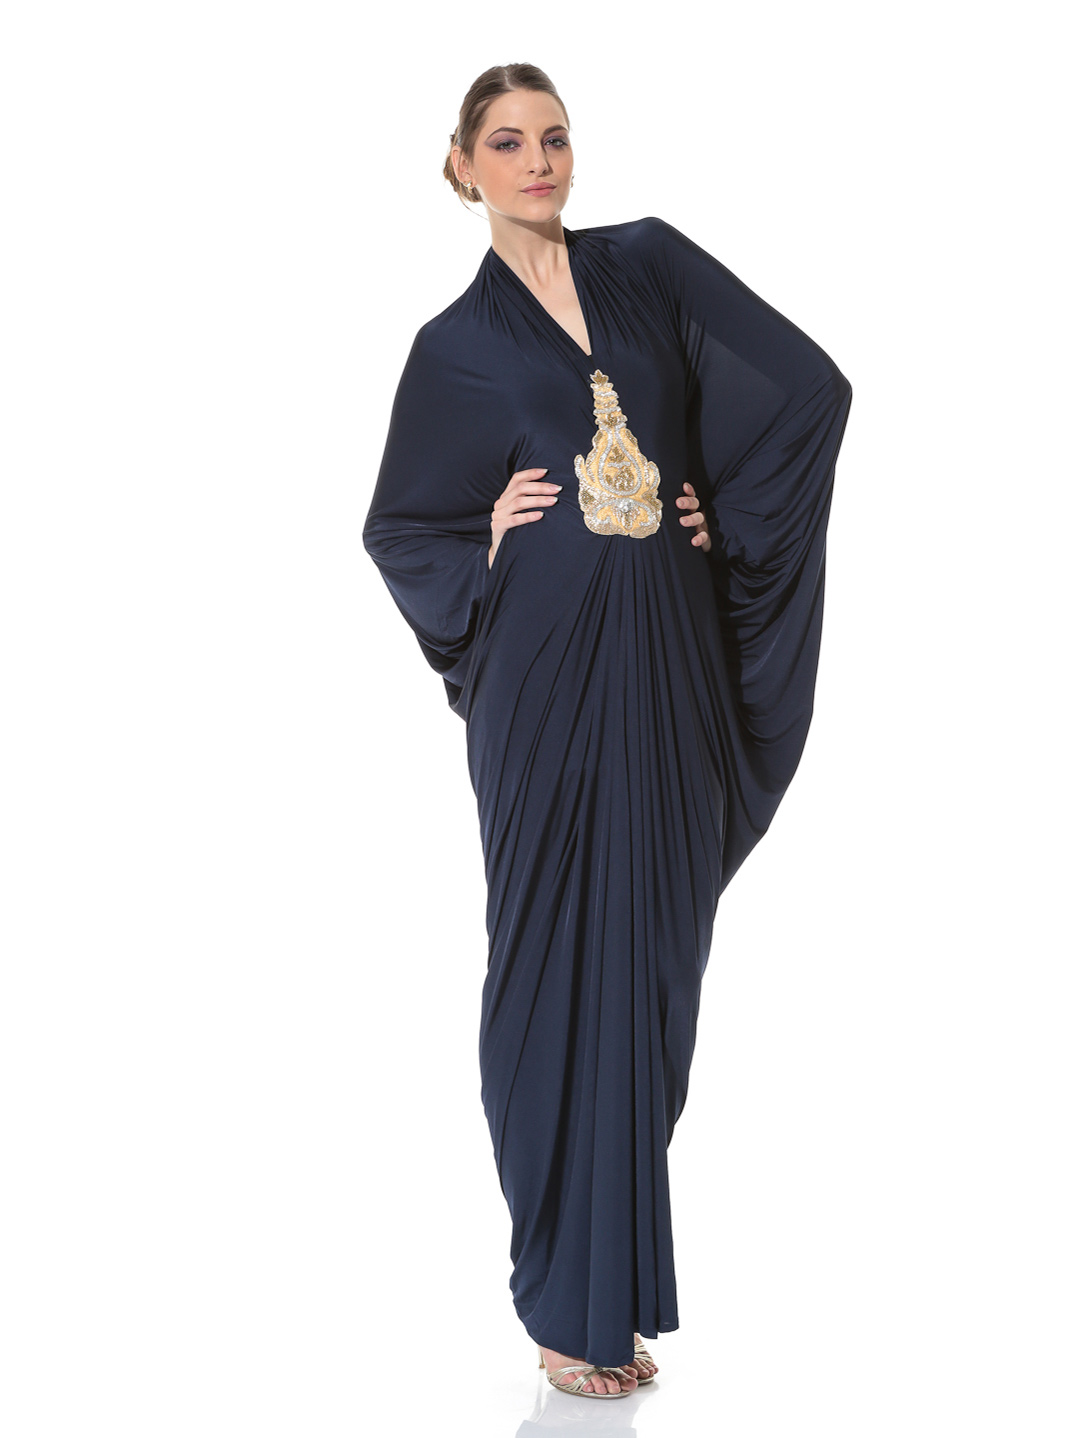 Jalabiya Designs 2013 Arabic Kaftan Dresses Collection for Girls